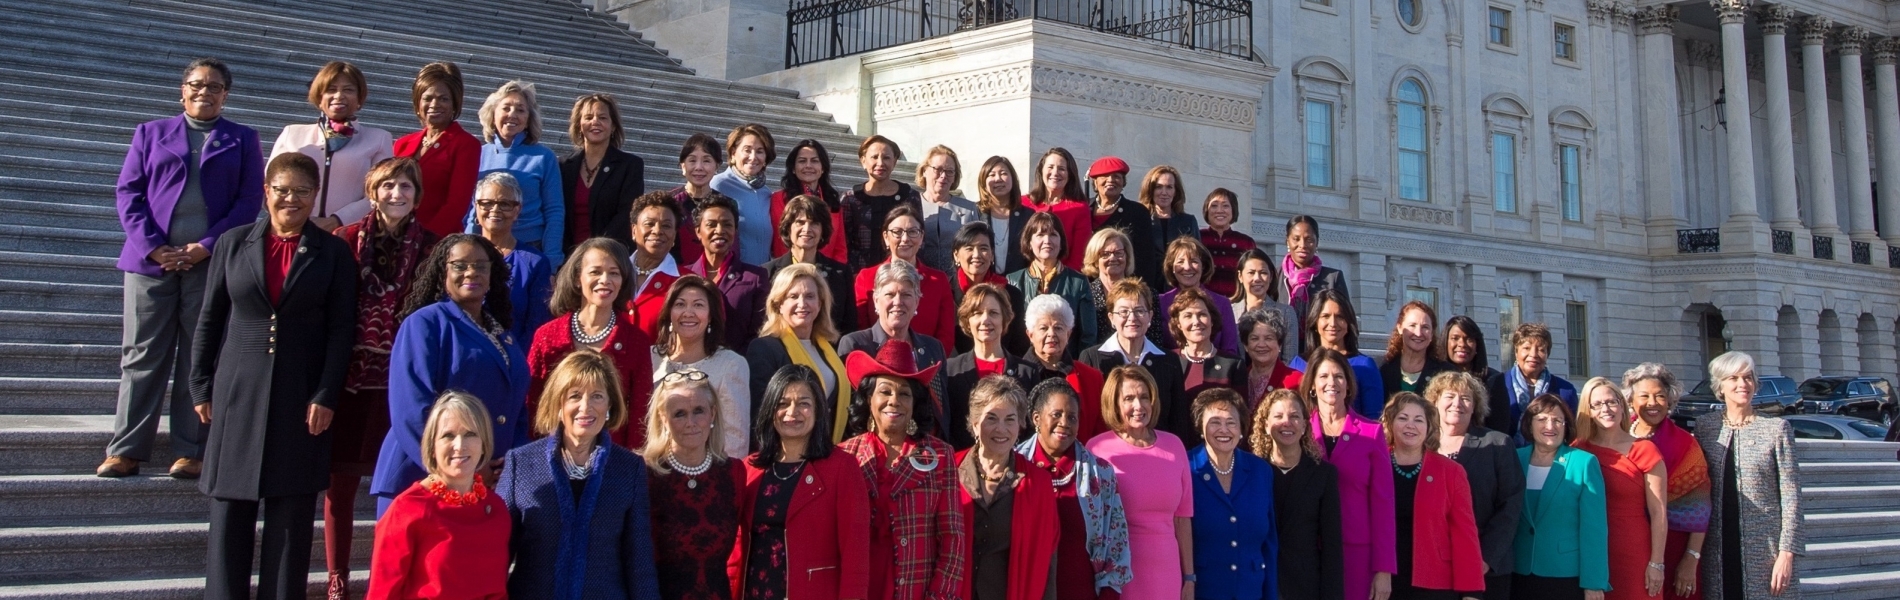 Democratic Women of the 115th Congress